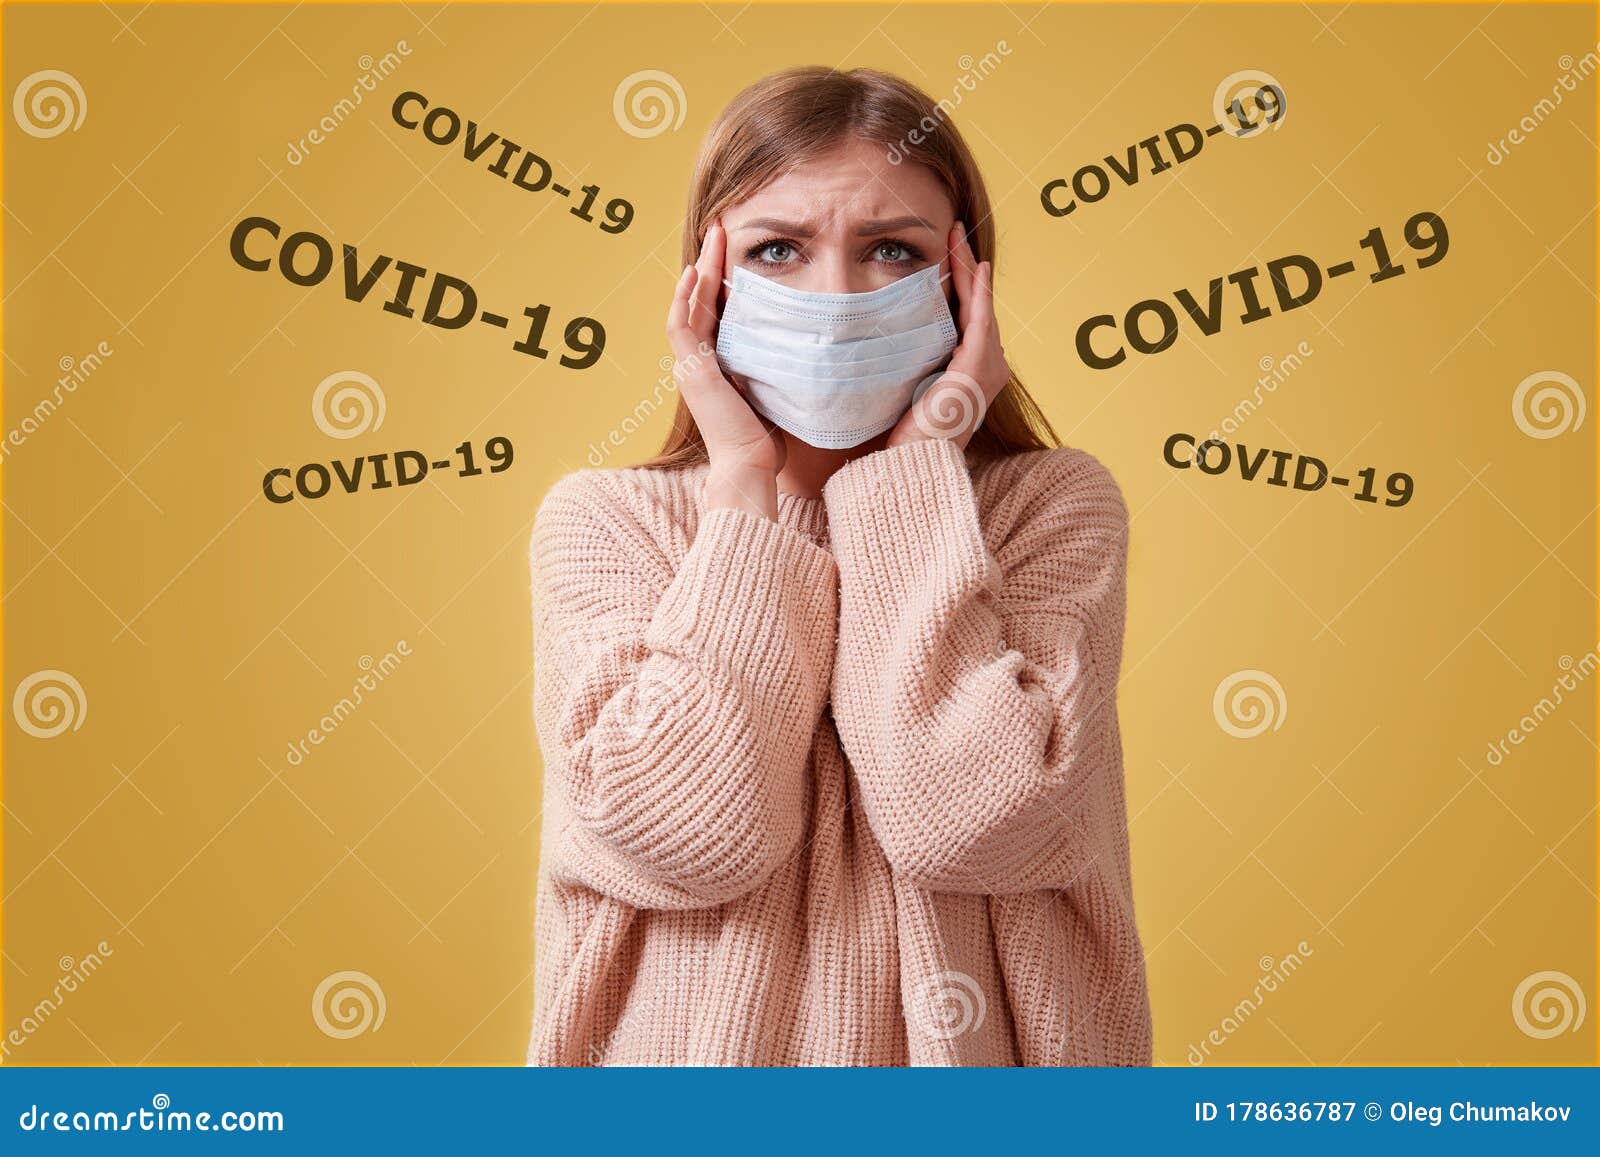 covid-19, pandemia. stop coronavirus. viral infection. sars cov 2. seasonal infections. shocked woman in medical mask